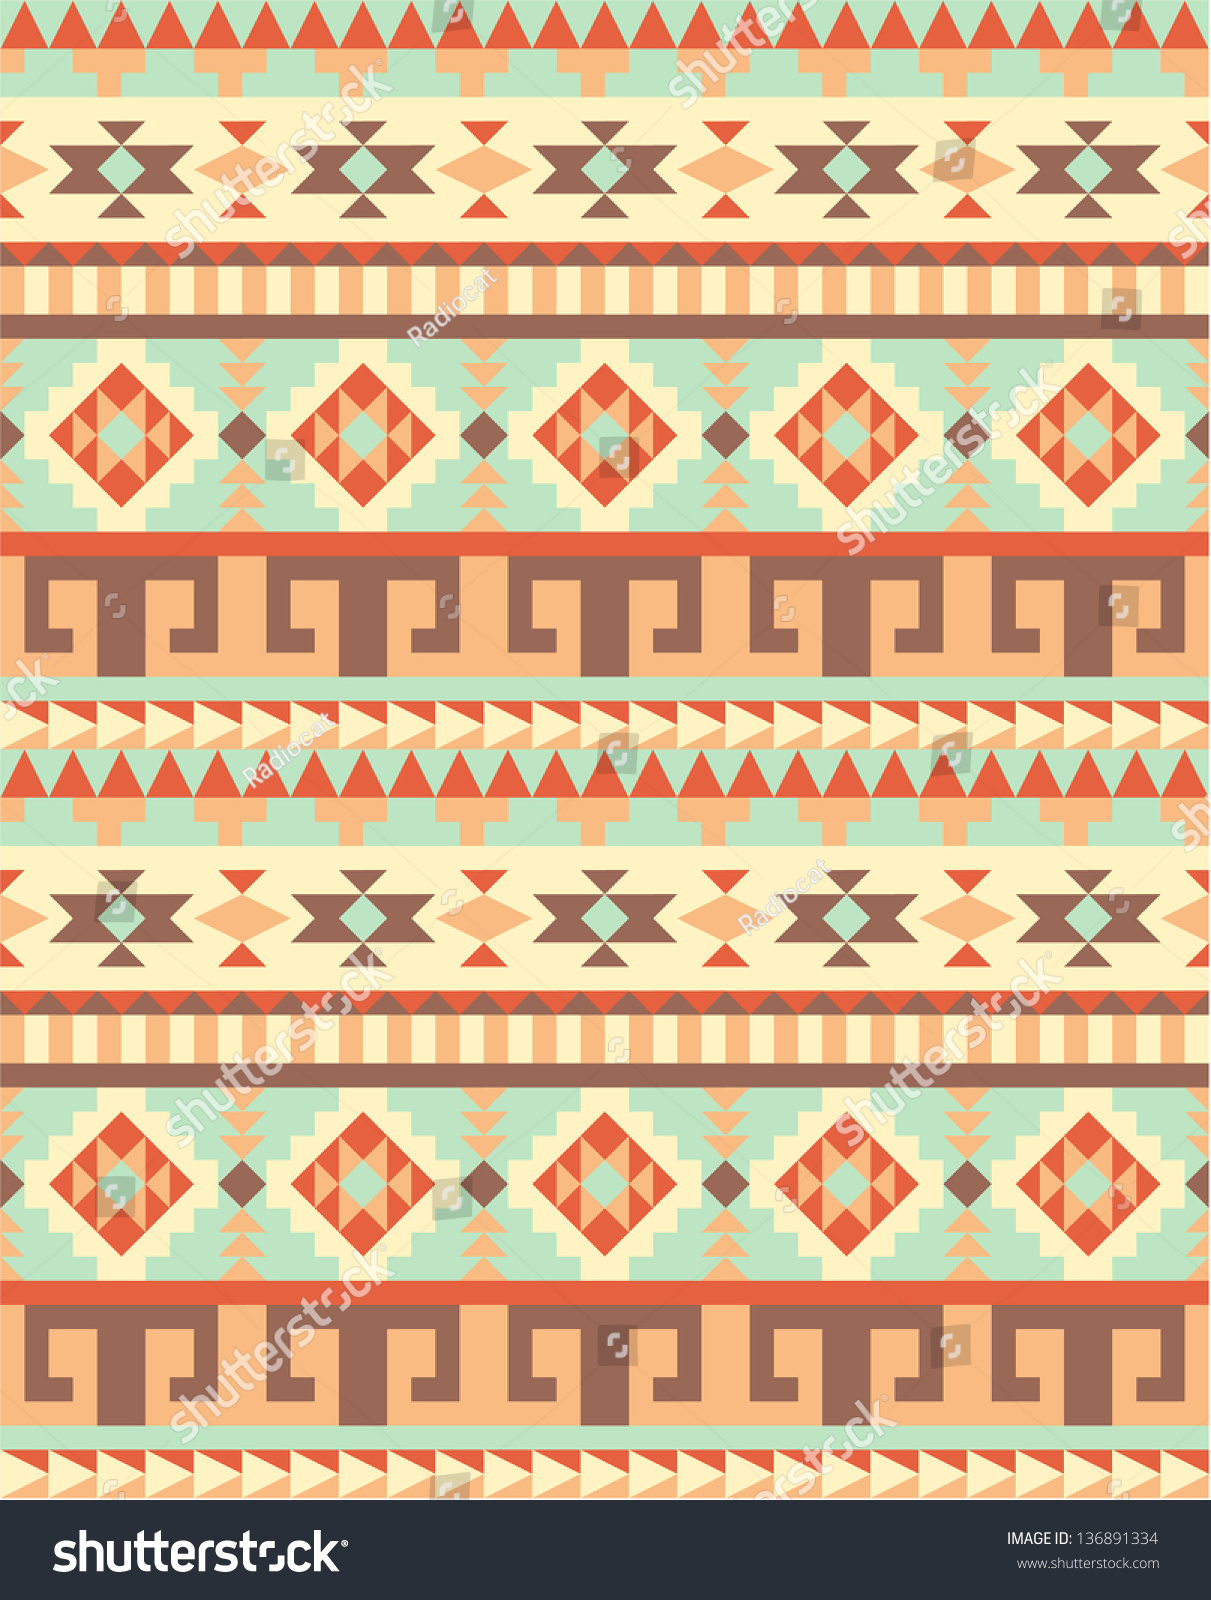 Seamless Traditional Aztec Pattern Stock Vector Illustration 136891334 ...